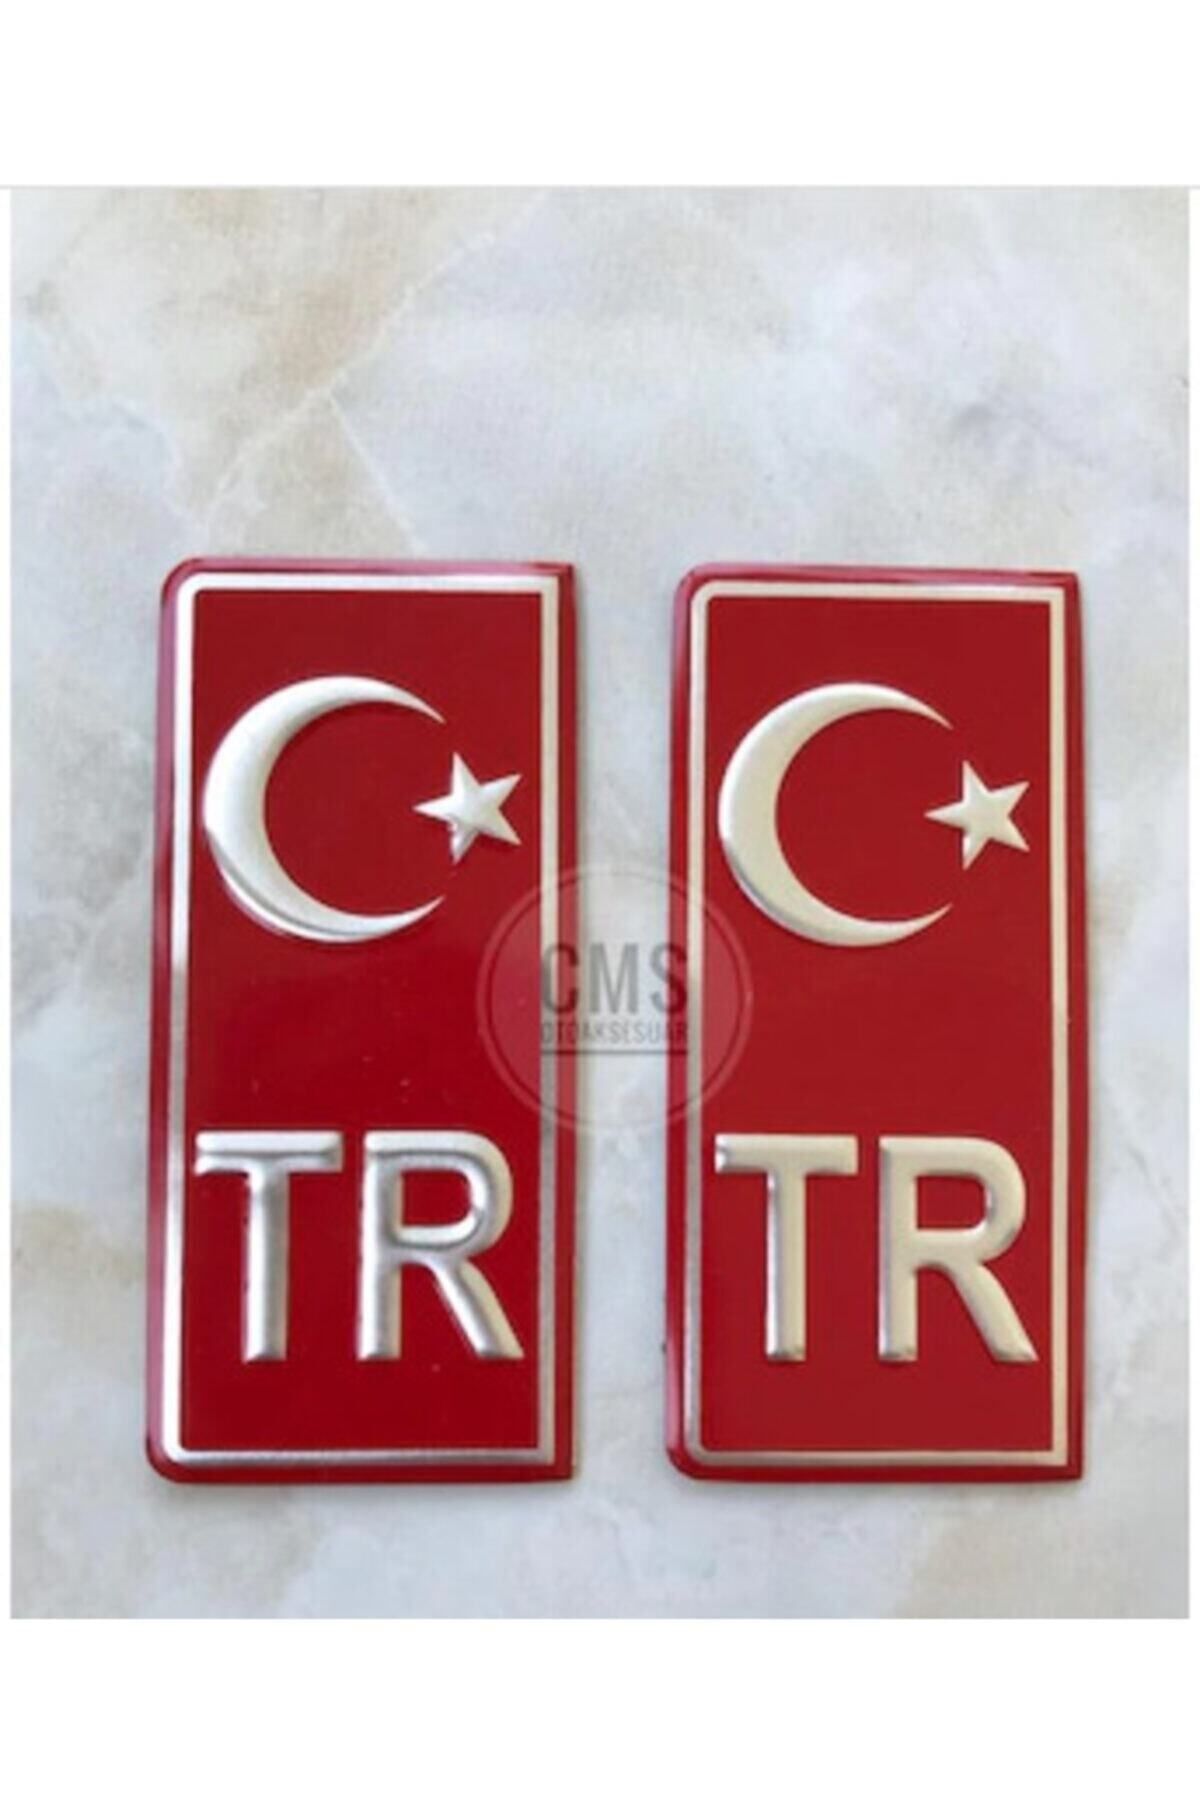 CMS OTO AKSESUAR Tr Plaka Stıcker 2'li - Türkiye Plaka Stıcker - Türkiye Plakalık Stickeri